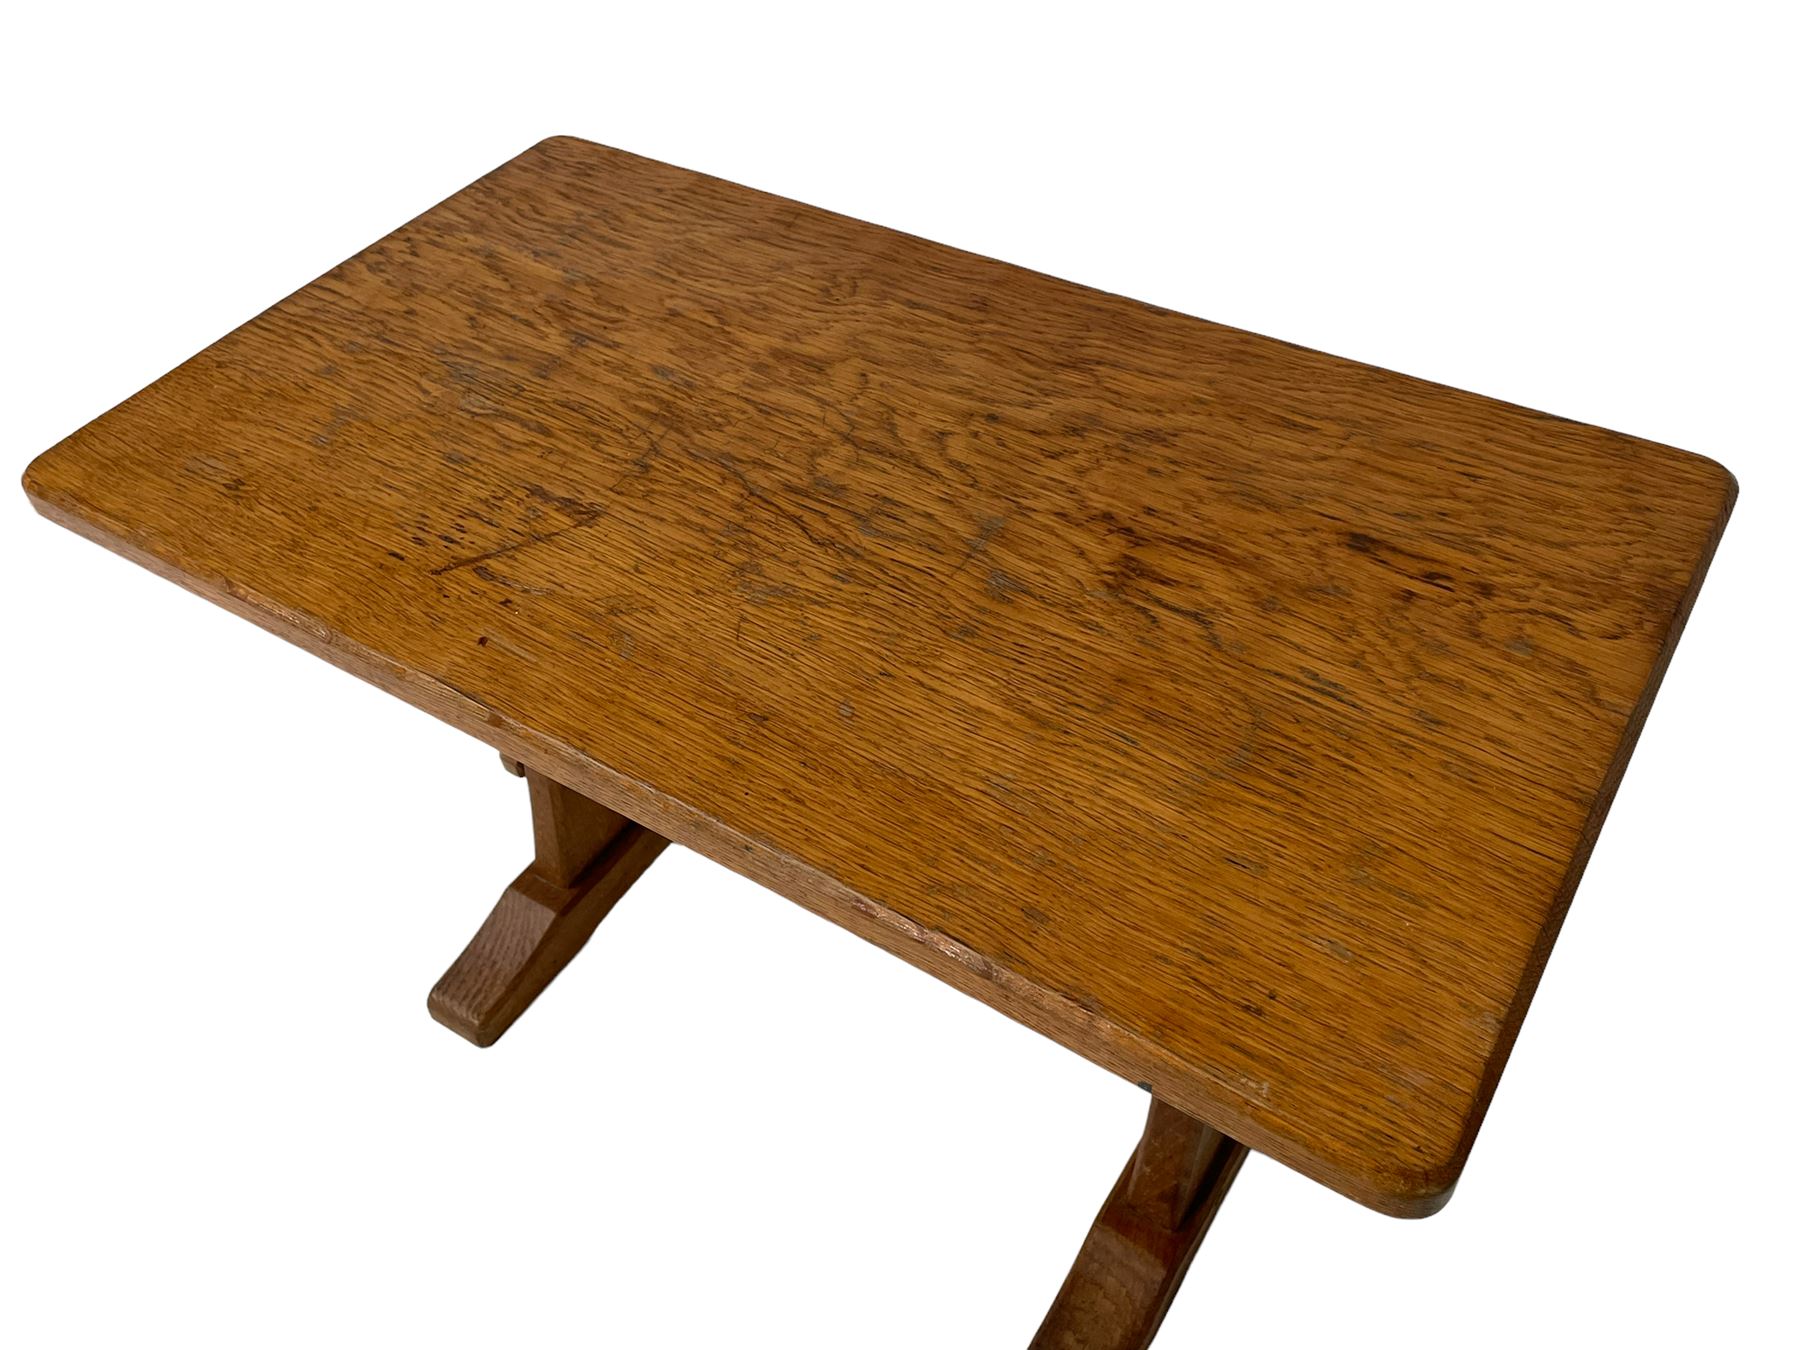 Acornman - rectangular adzed oak coffee table - Image 5 of 8